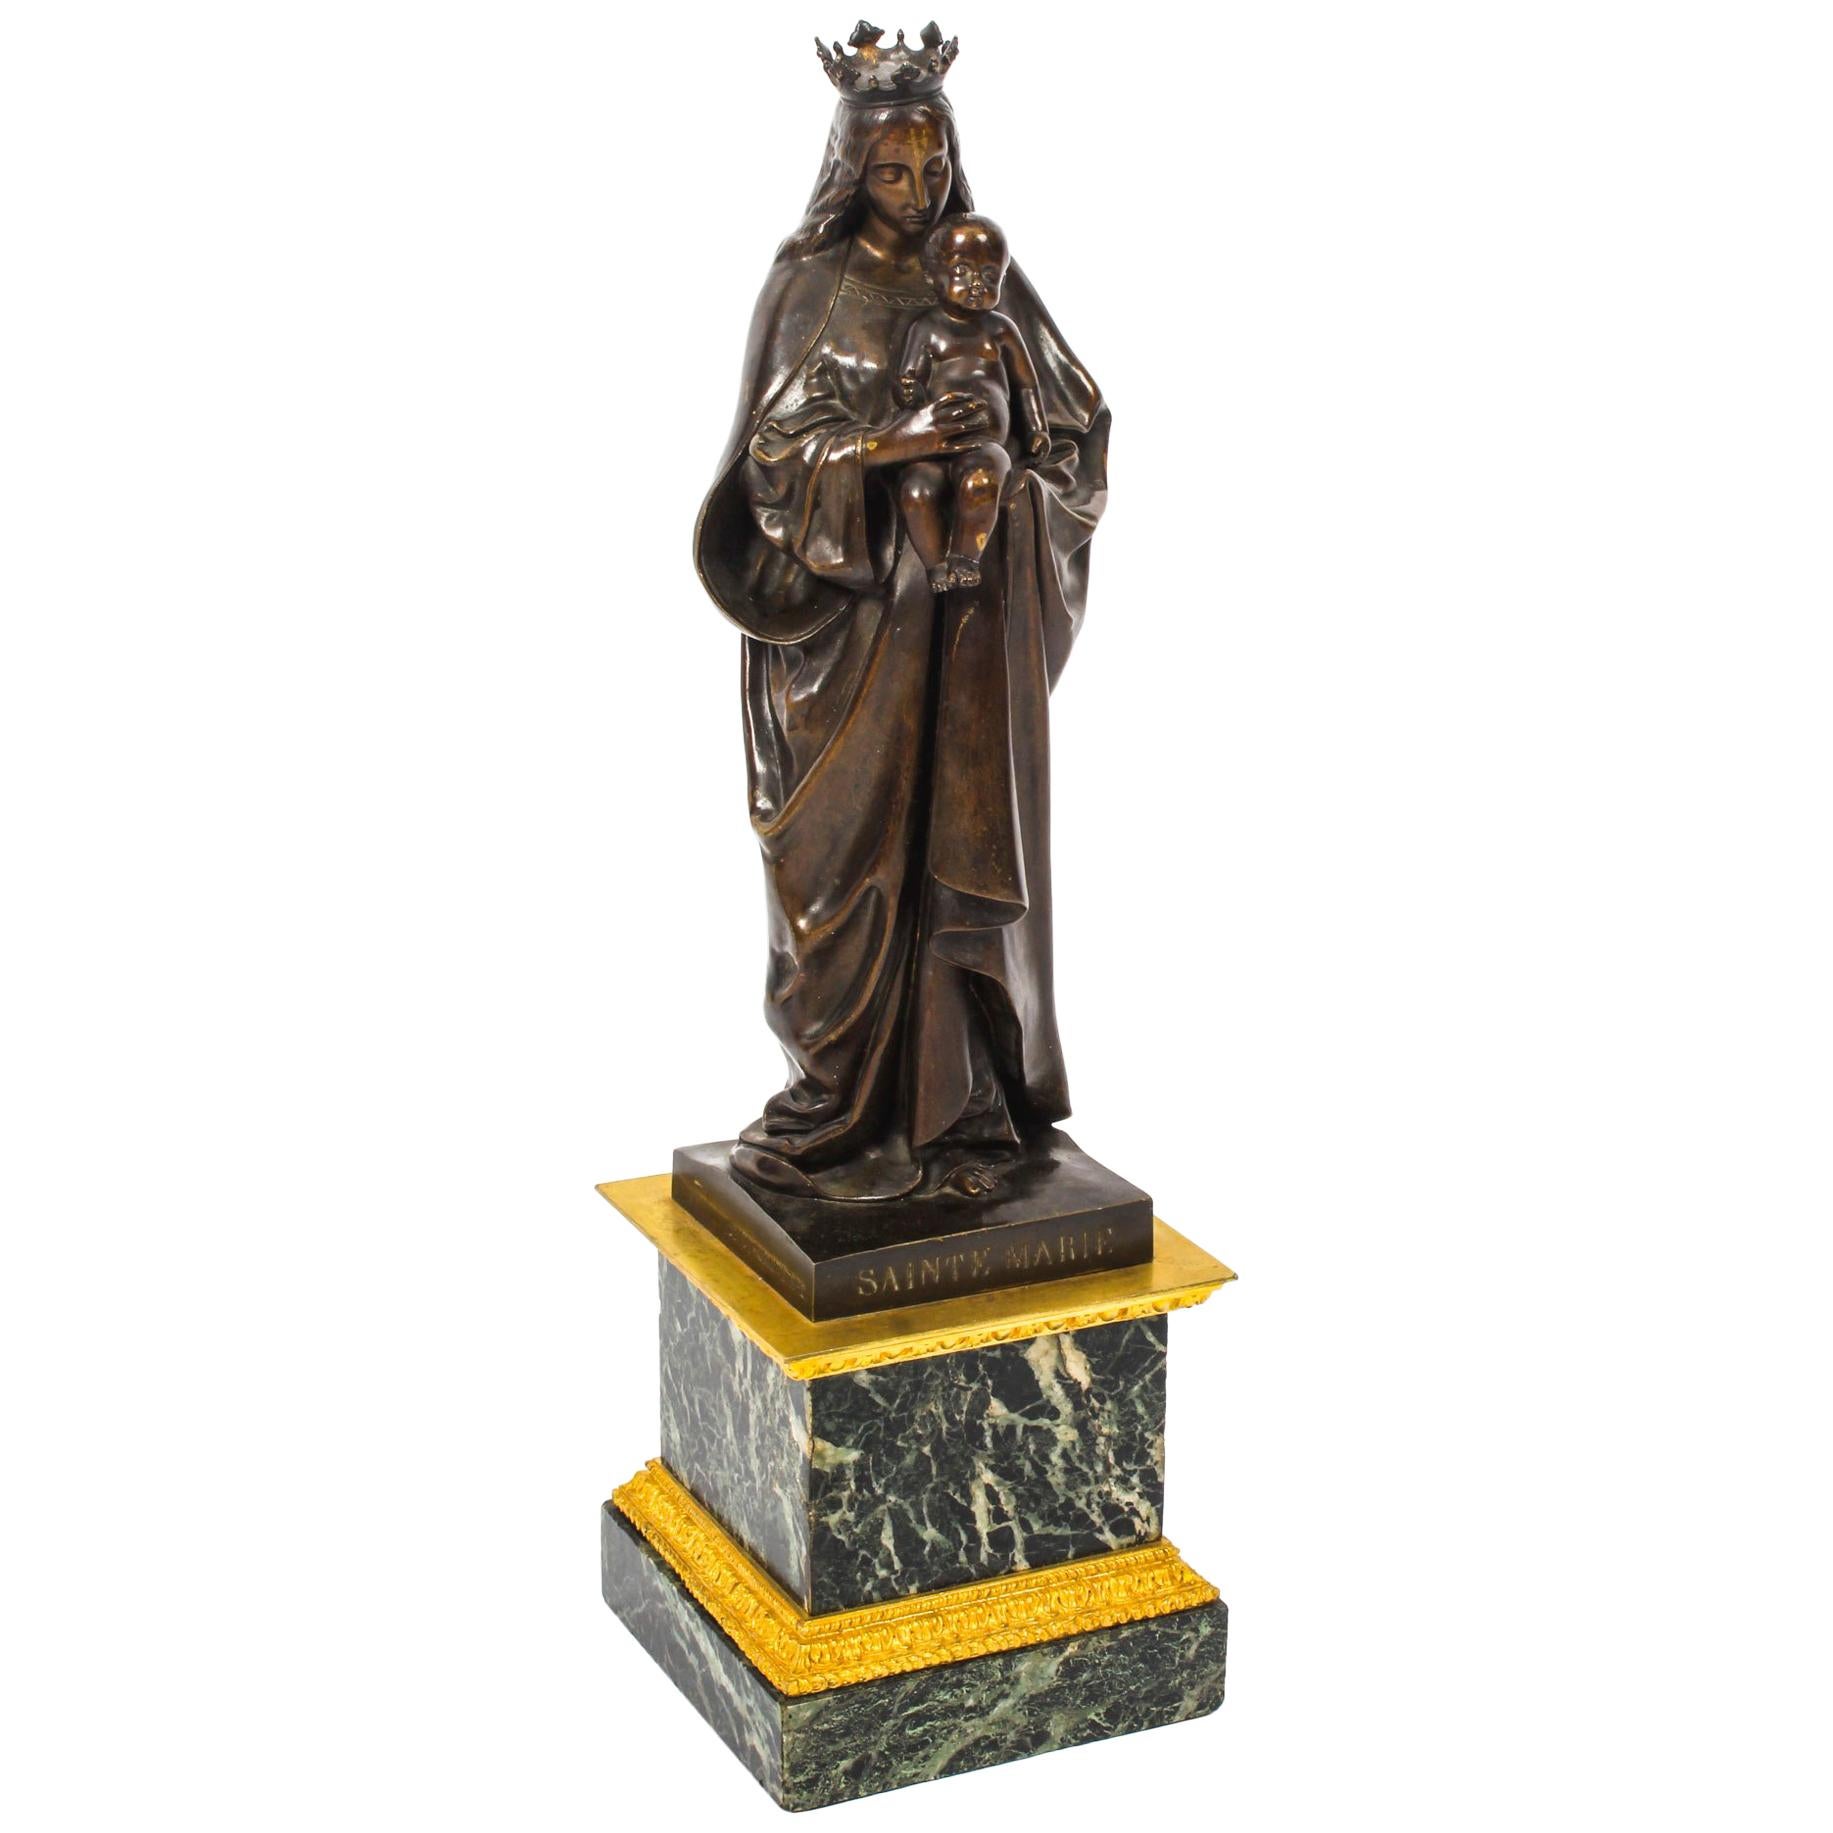 Antique French Bronze of Sainte Maria by De Beaumont, 19th Century